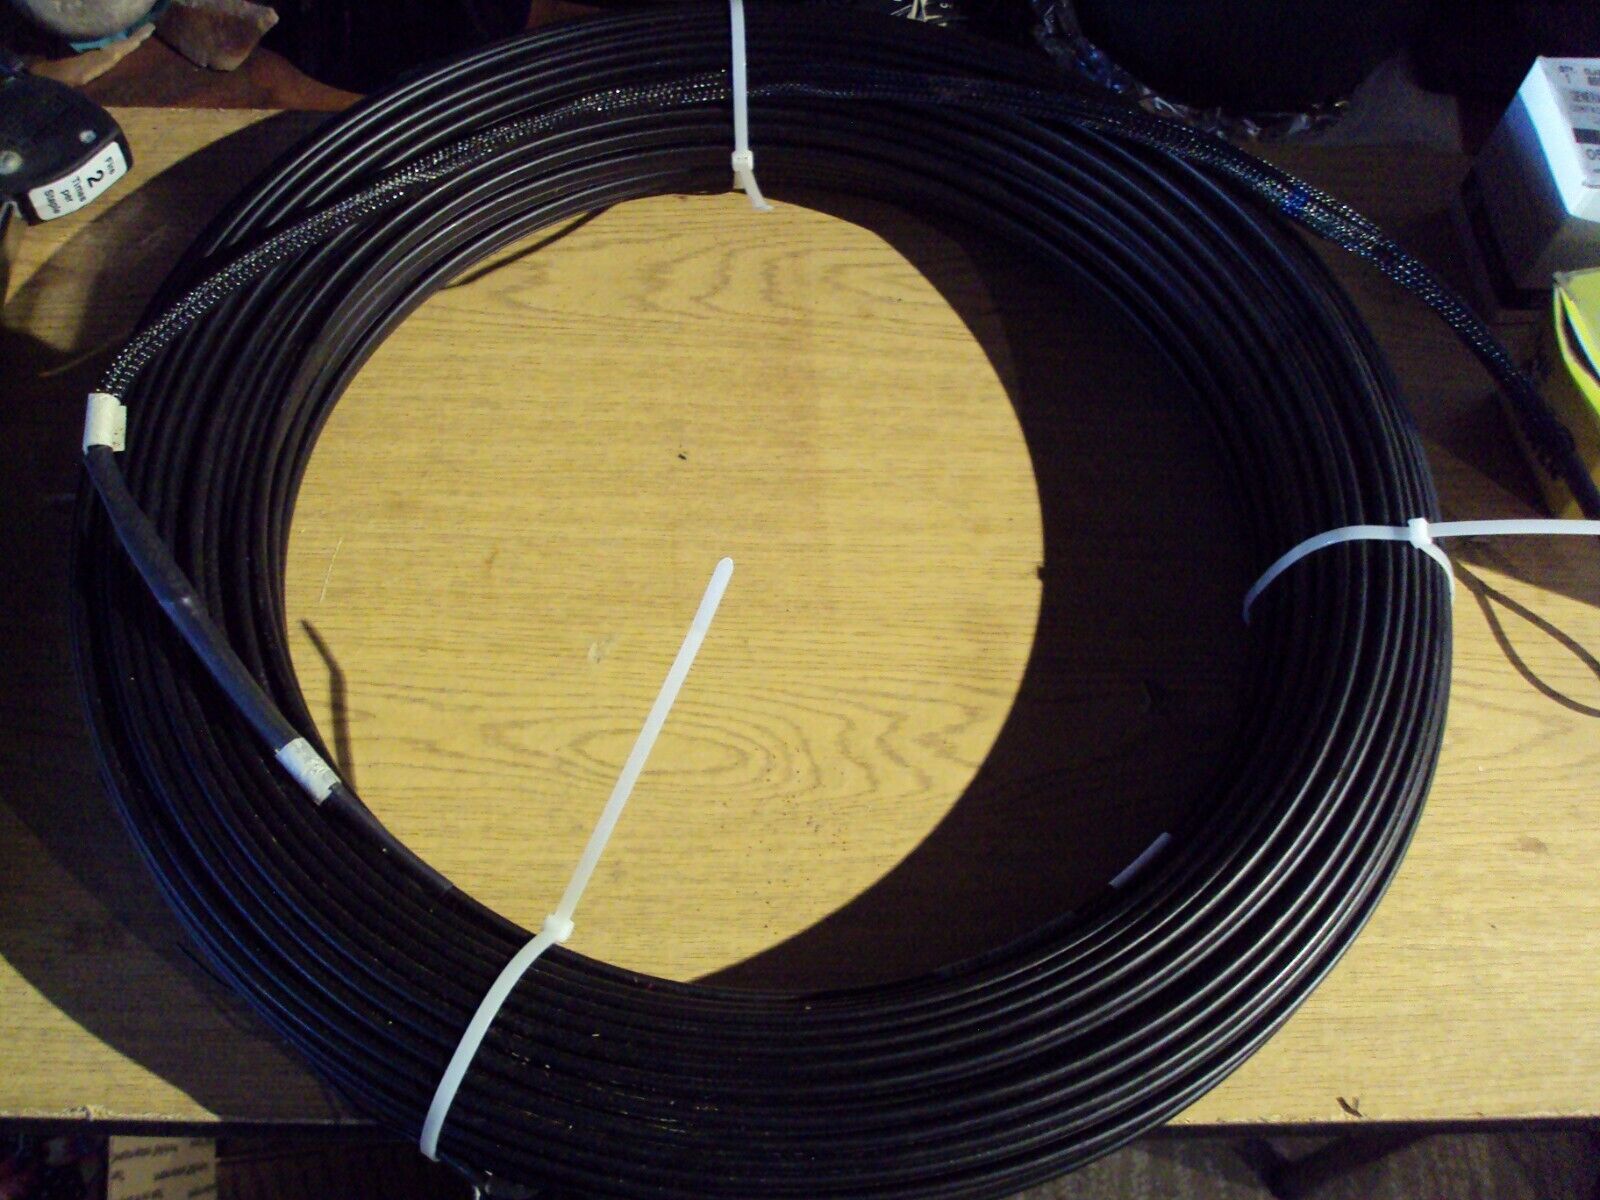 CommScope Fiber Optic Cable 400ft Length 71251562216 FHD HJ1D